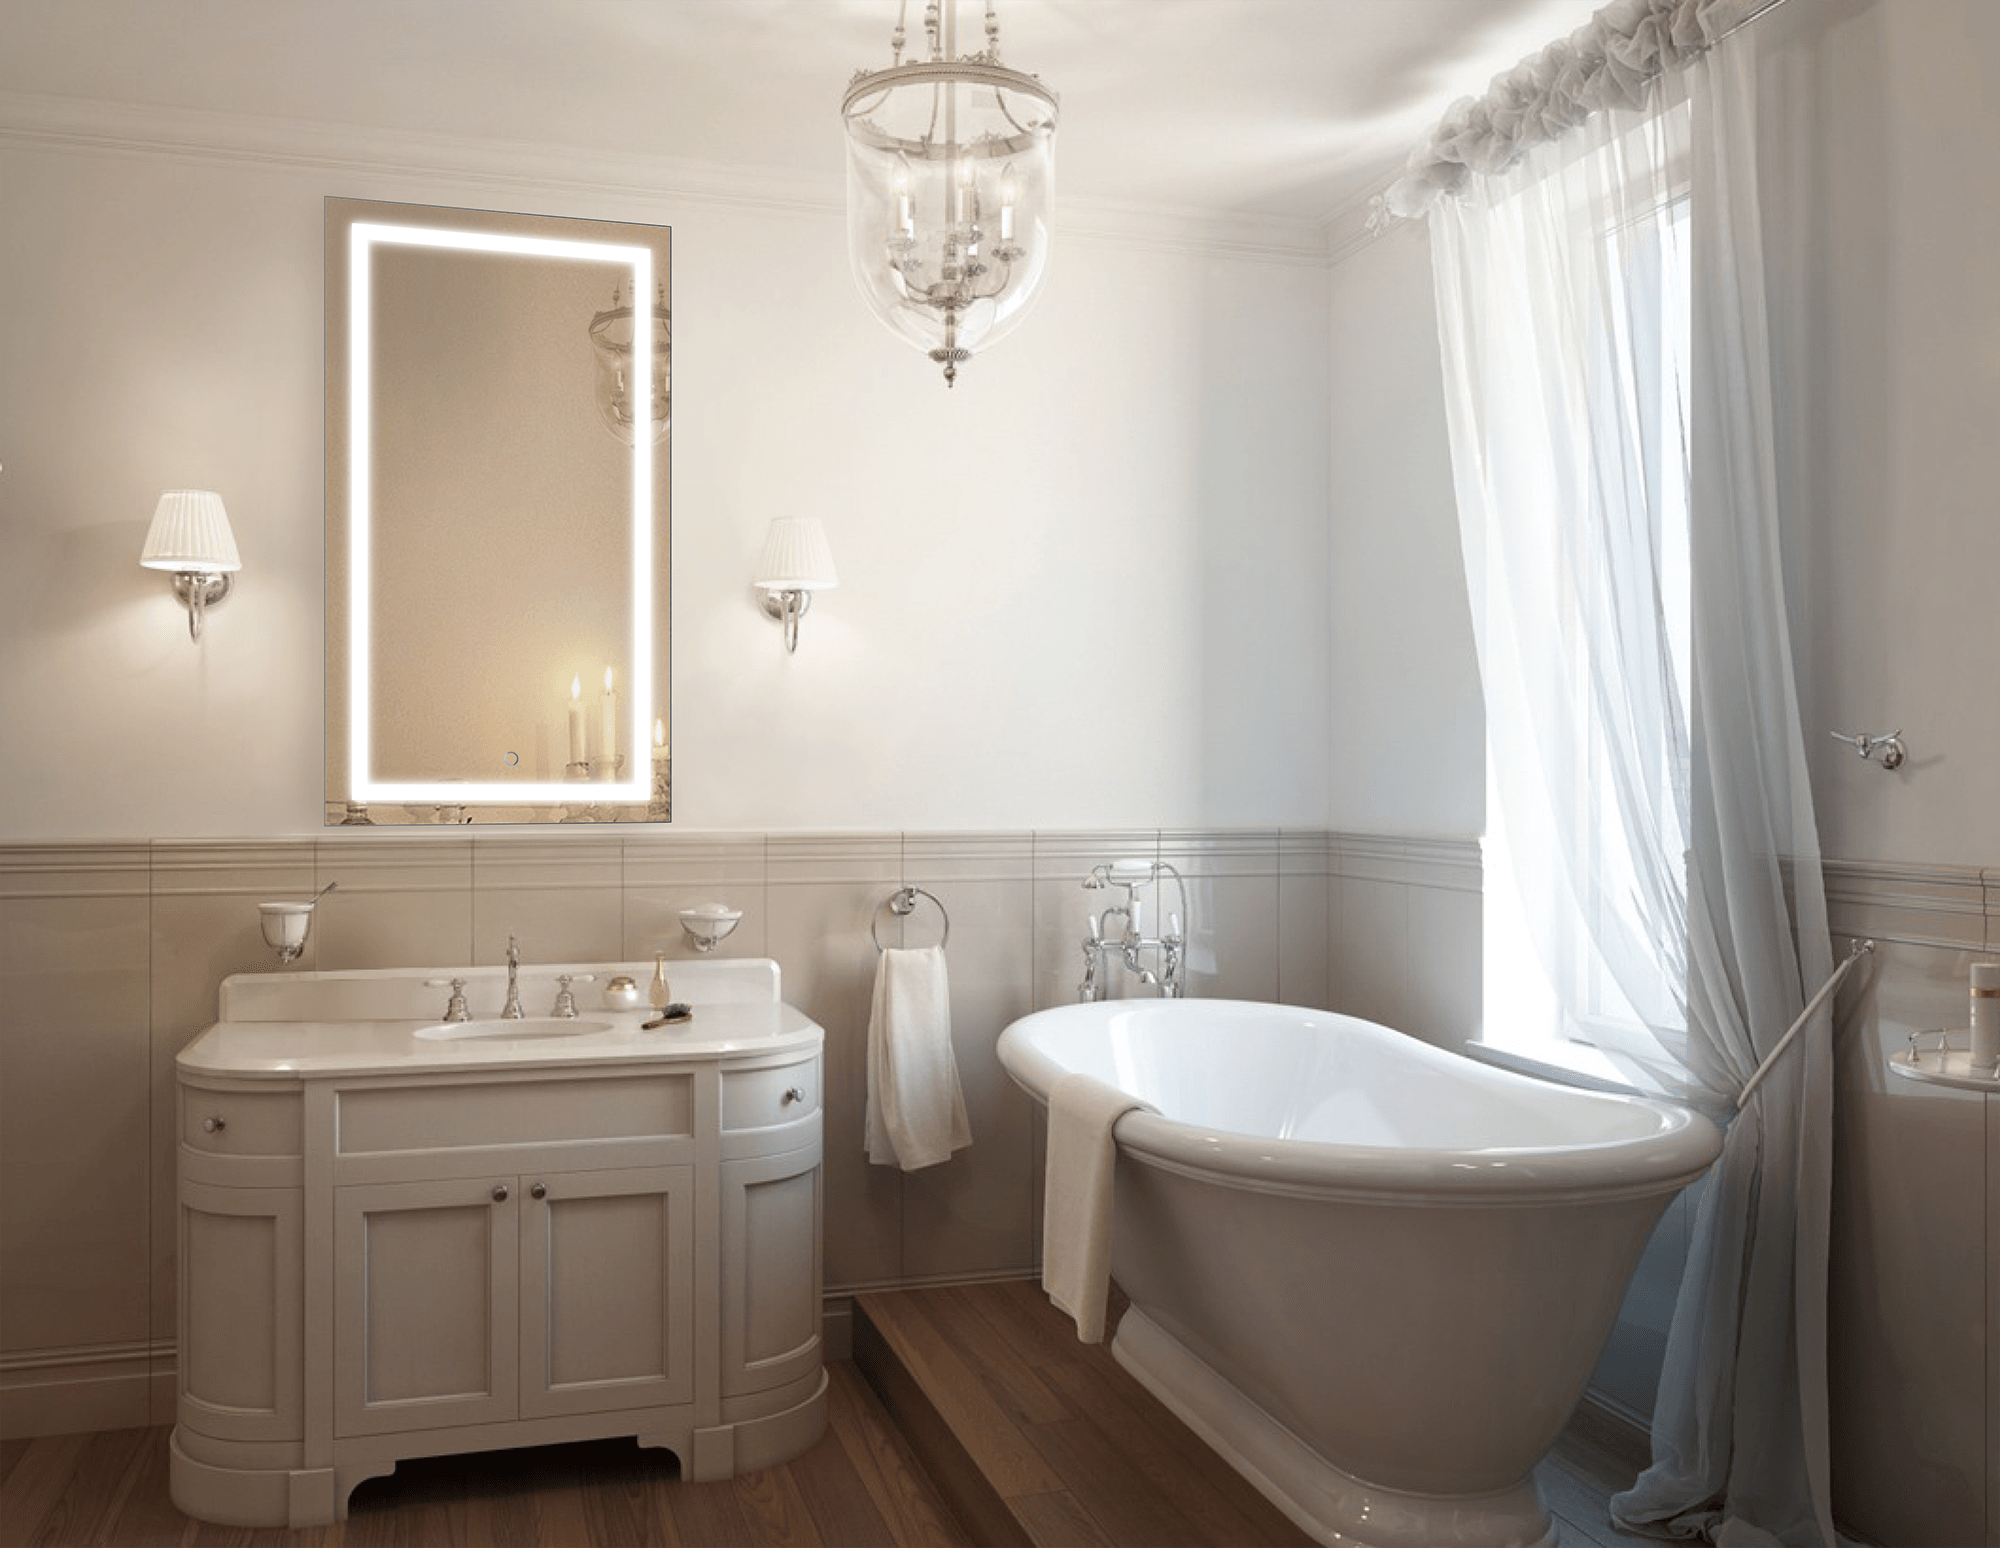 Krugg Icon 42″ x 24″ LED Bathroom Mirror With Dimmer & Defogger